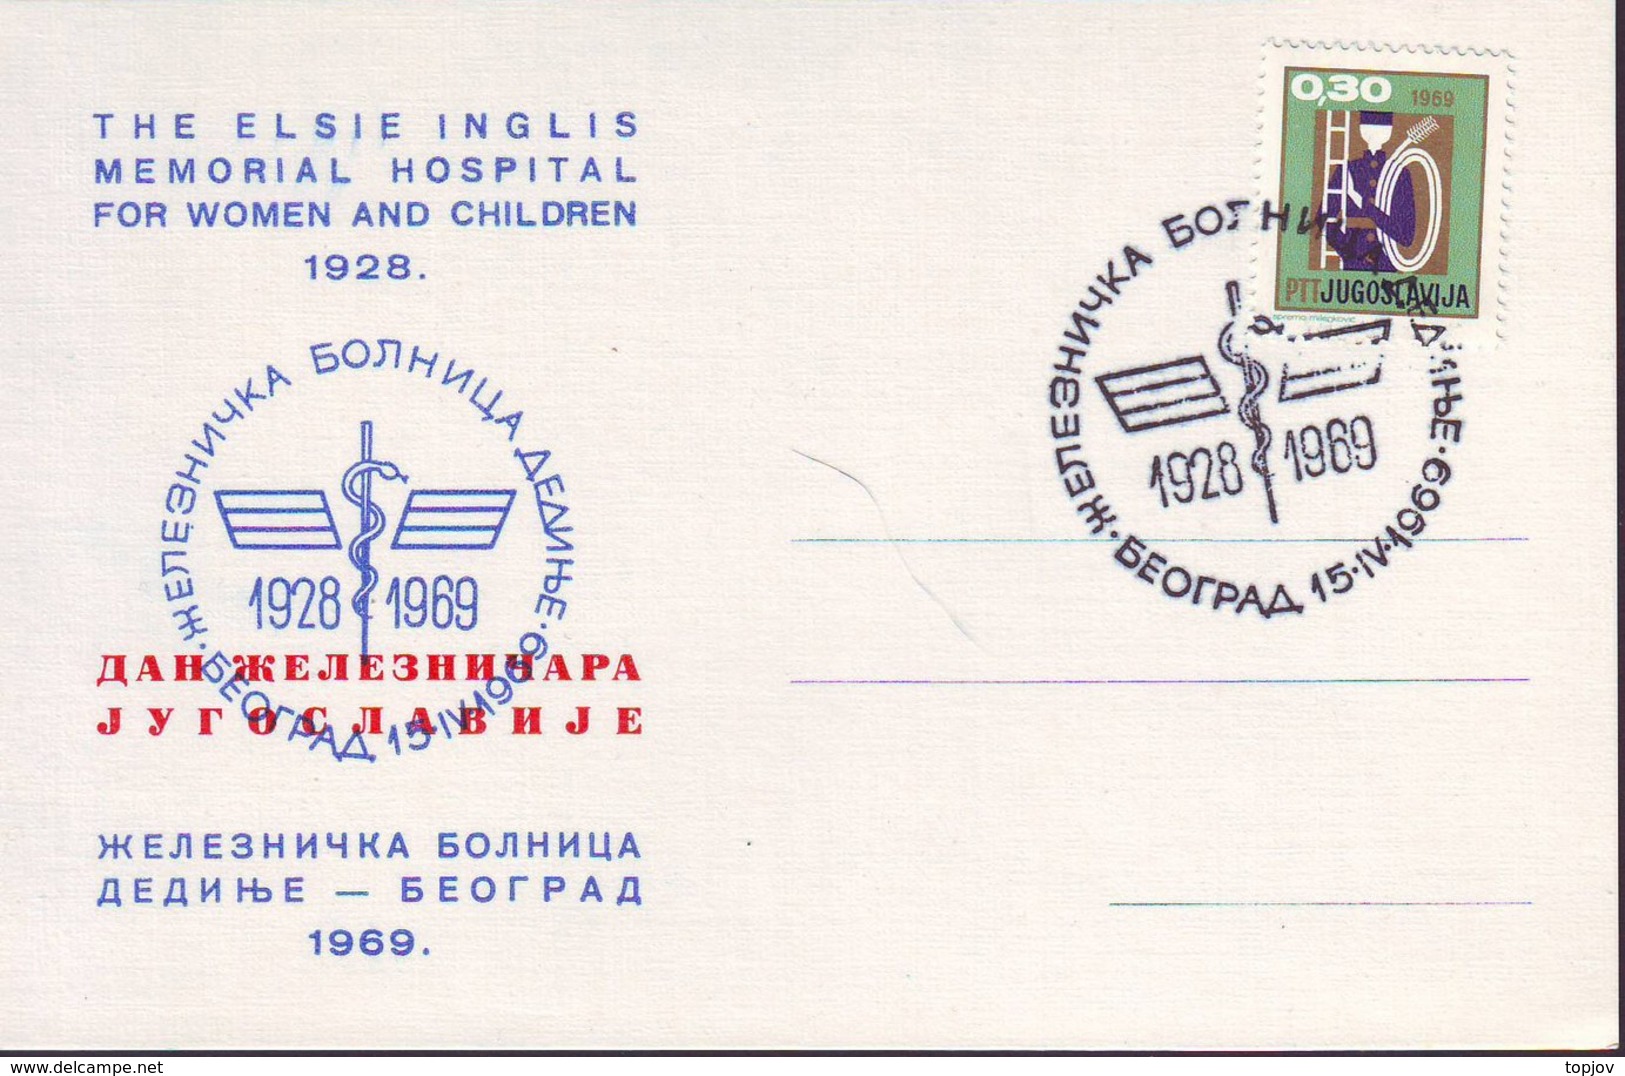 YUGOSLAVIA  - JUGOSLAVIA  - MEMORIAL HOSPITAL FOR WOMEN AND CHILDREN 1928 - BEOGRAD - 1969 - Umweltverschmutzung